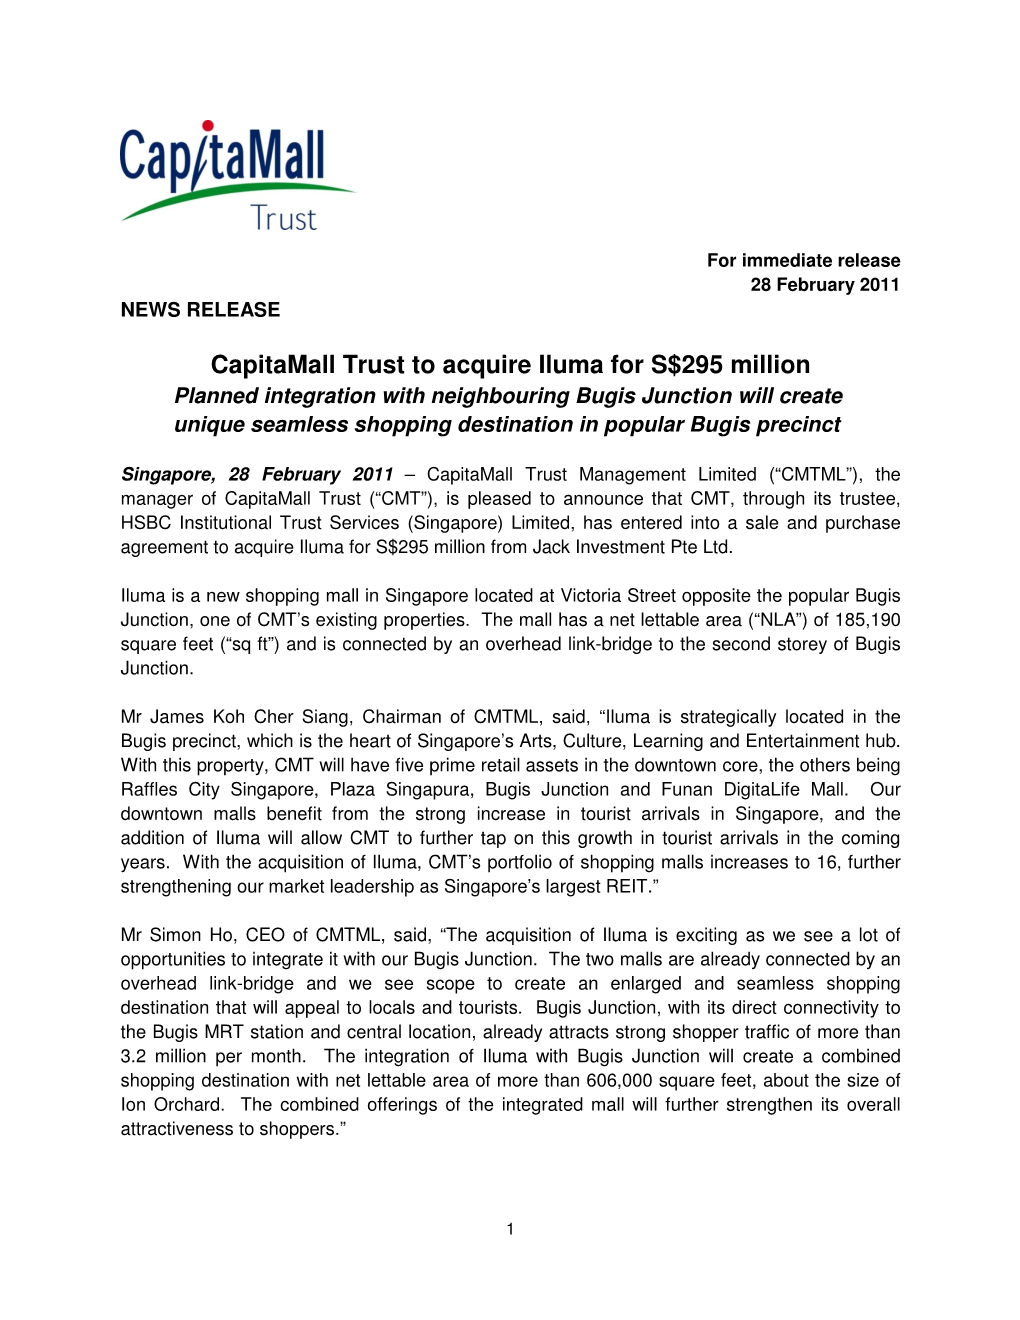 Capitamall Trust to Acquire Iluma for S$295 Million